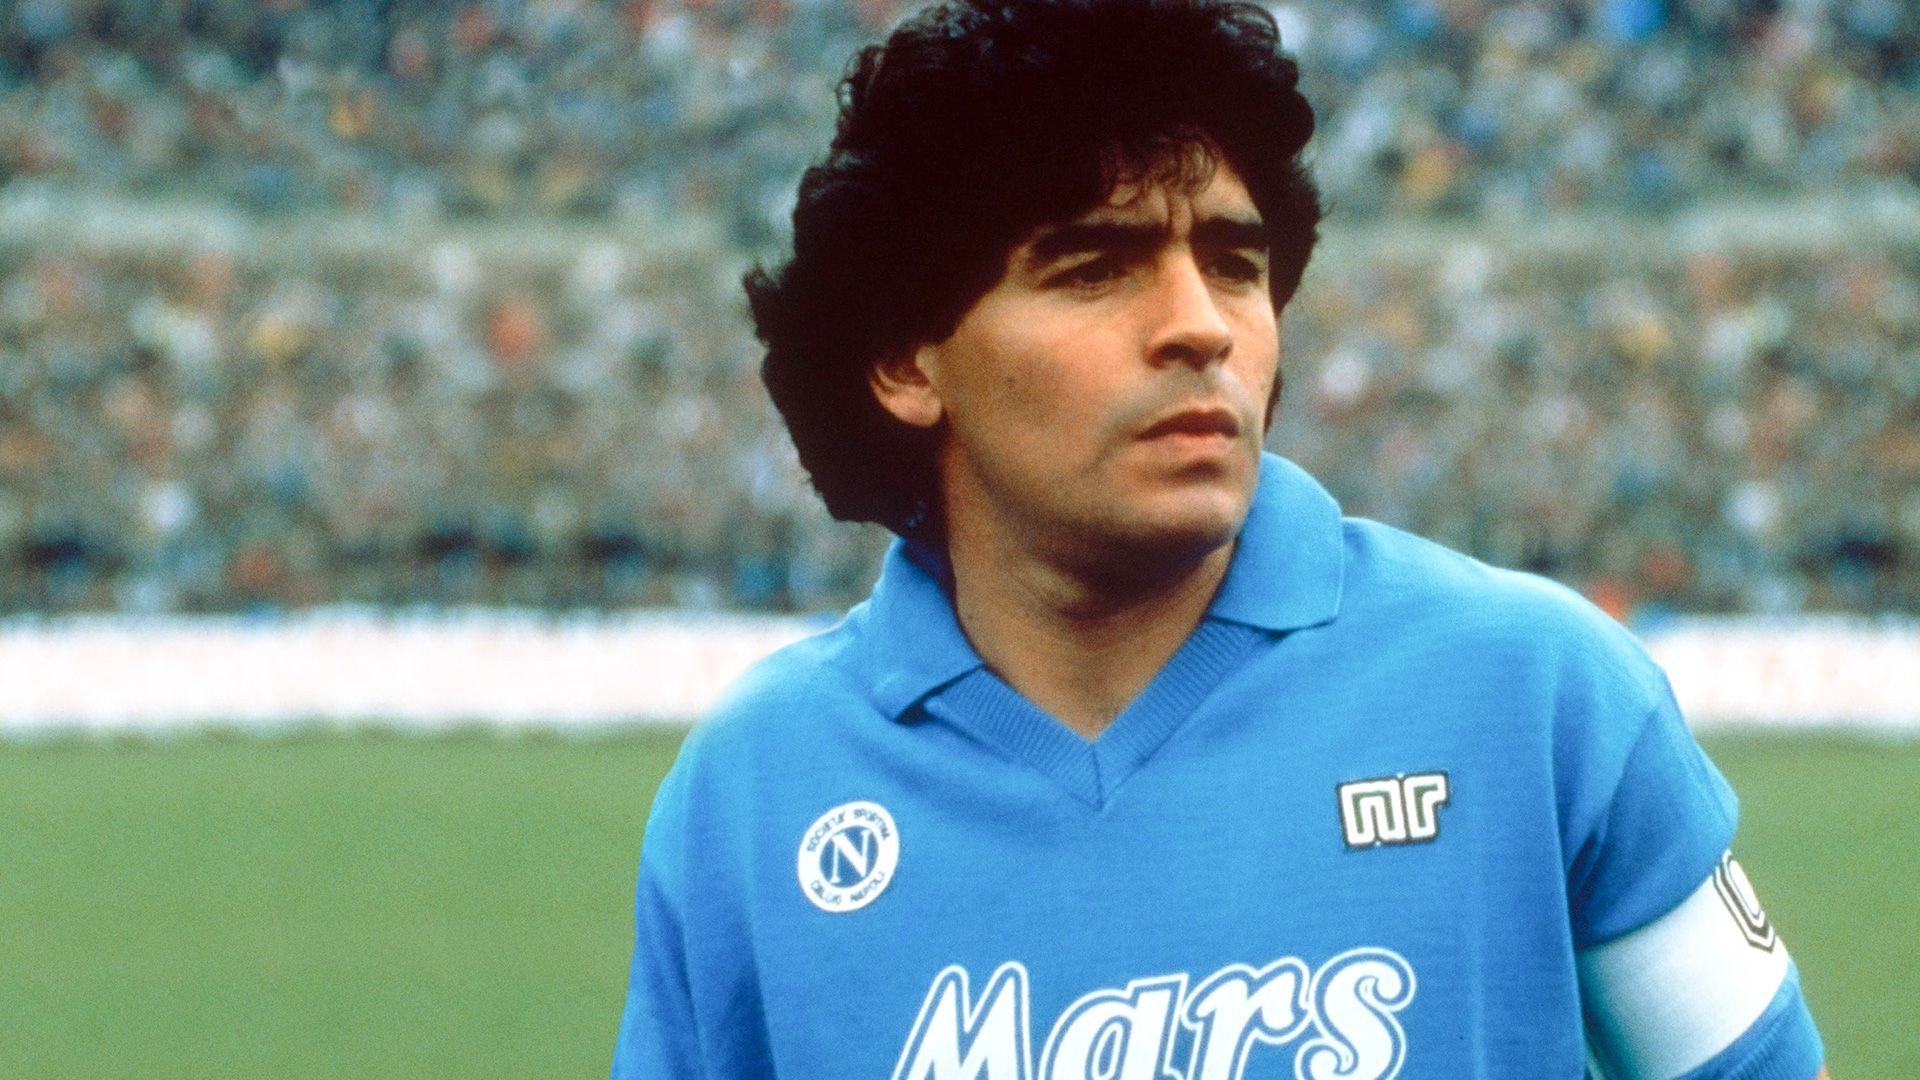 Argentina legend Diego Maradona has died